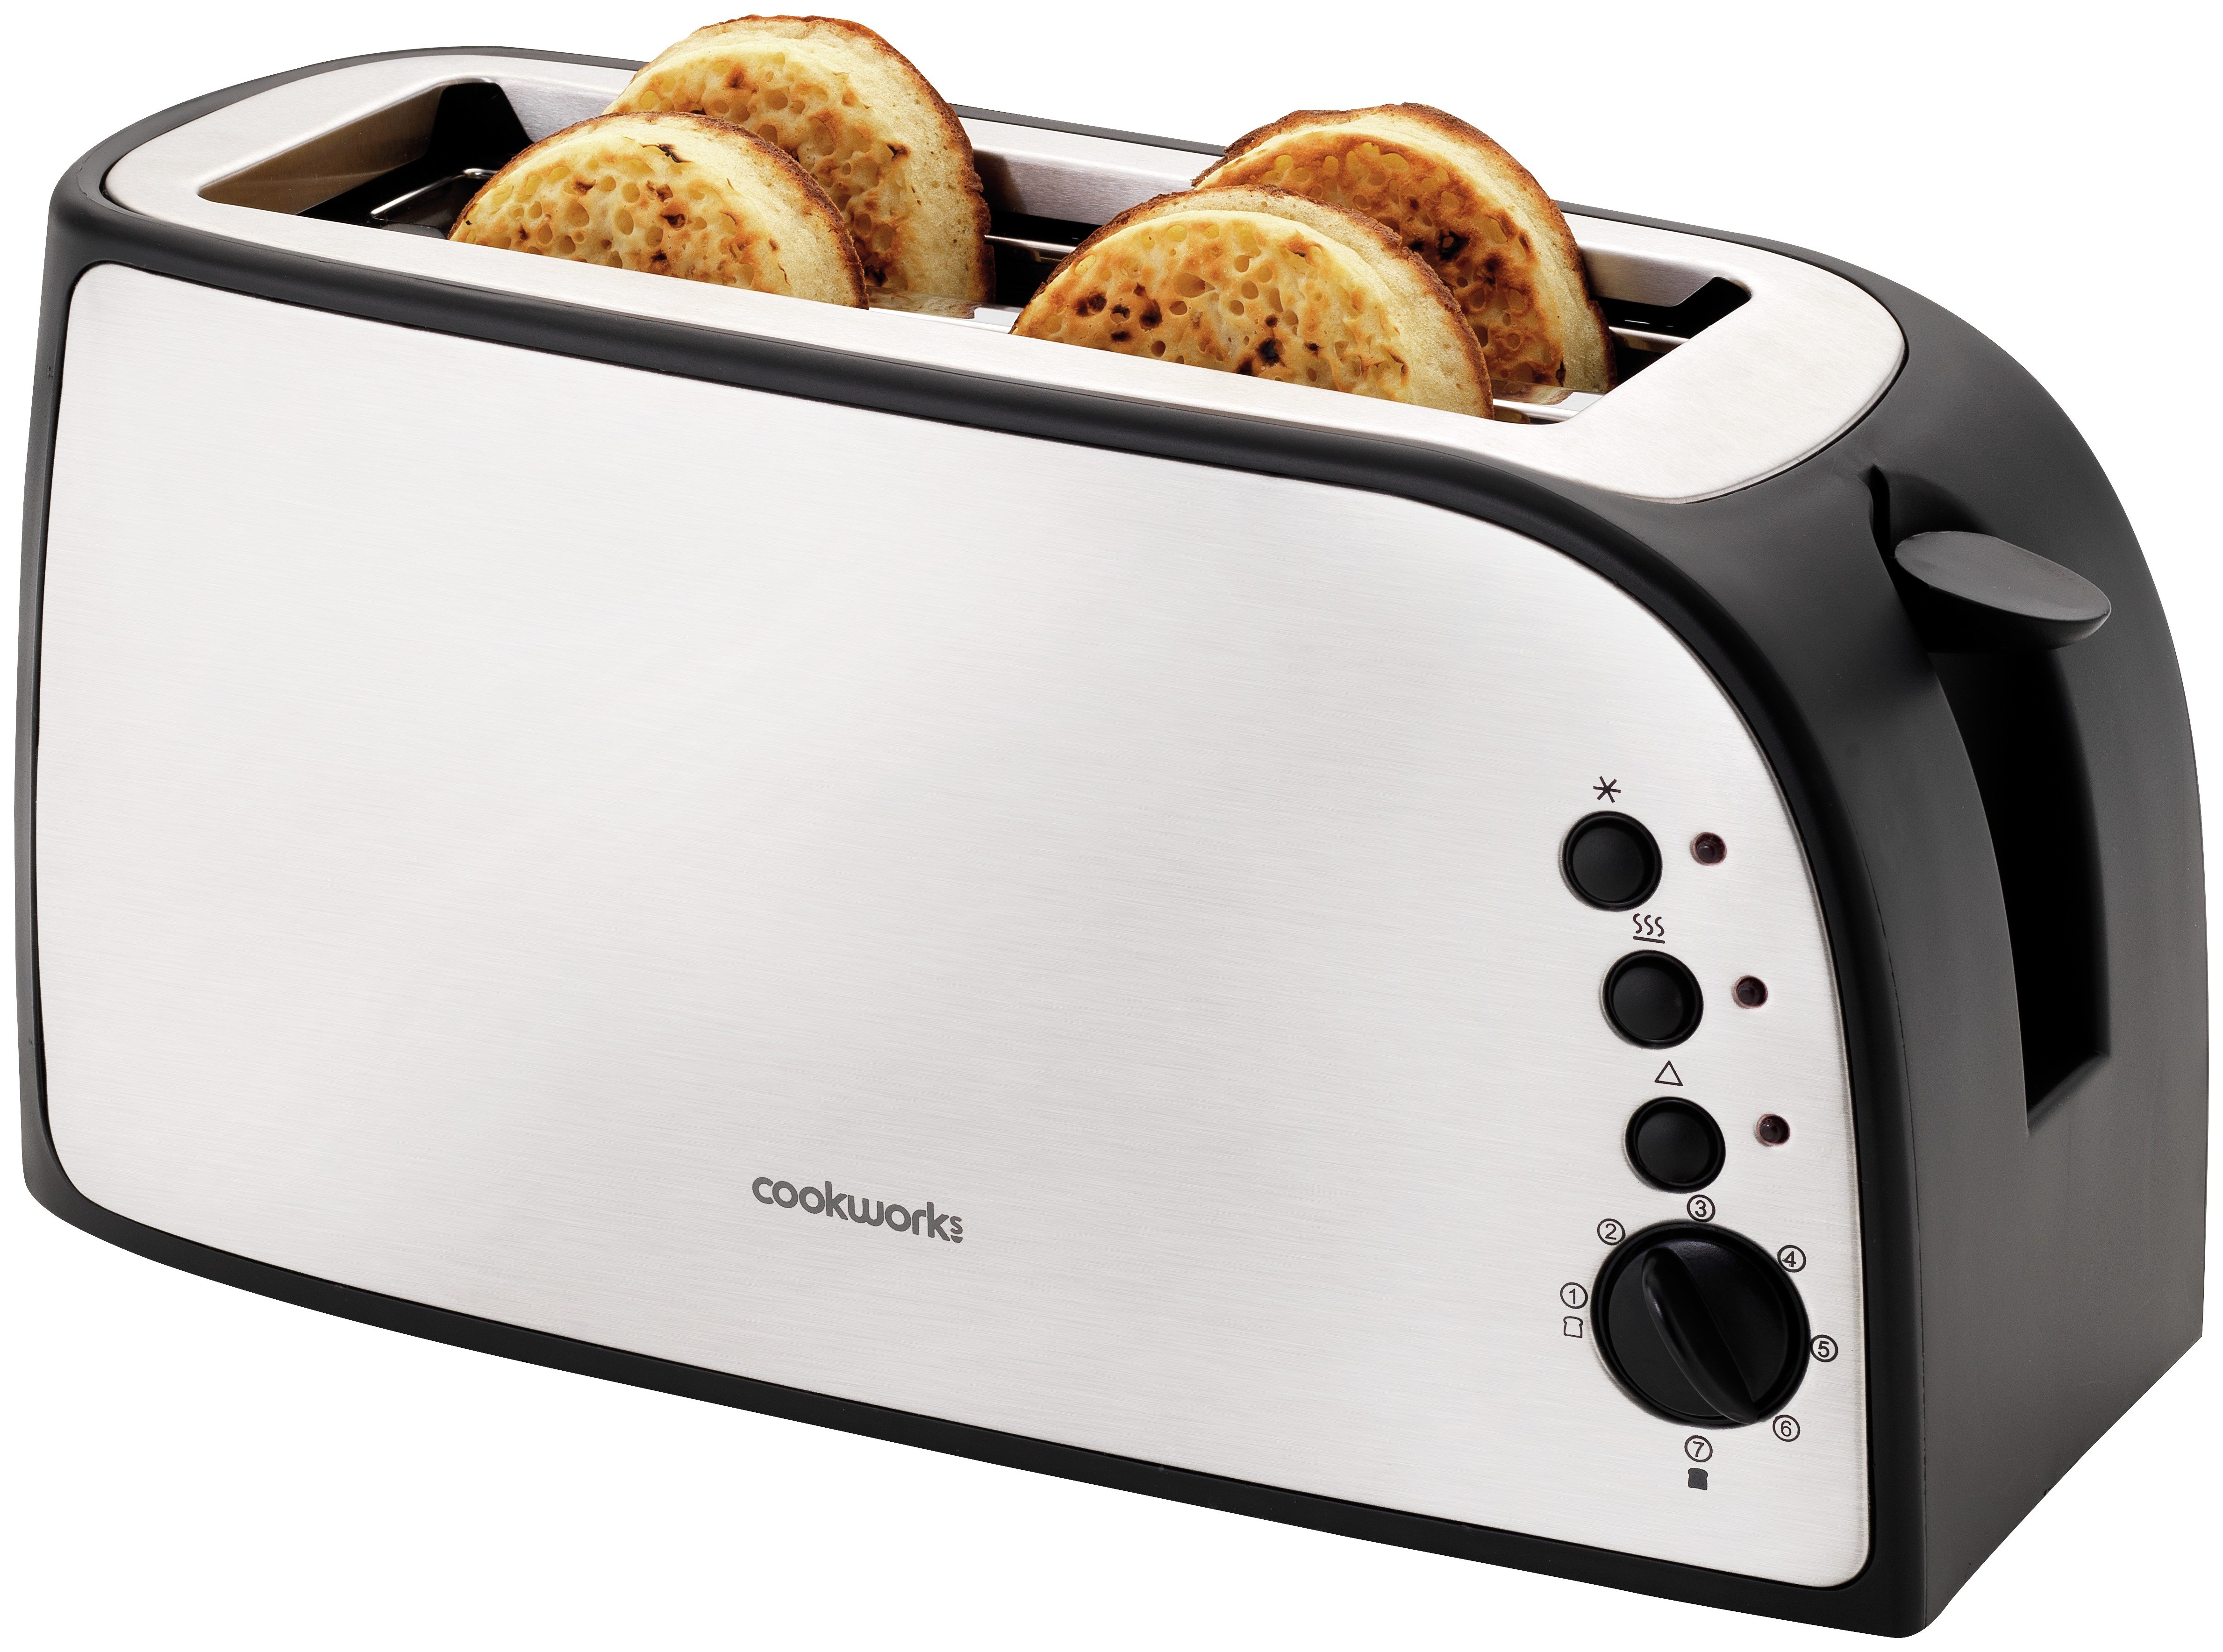 'Cookworks 4 Slice Toaster 1500 Watts - Stainless Steel